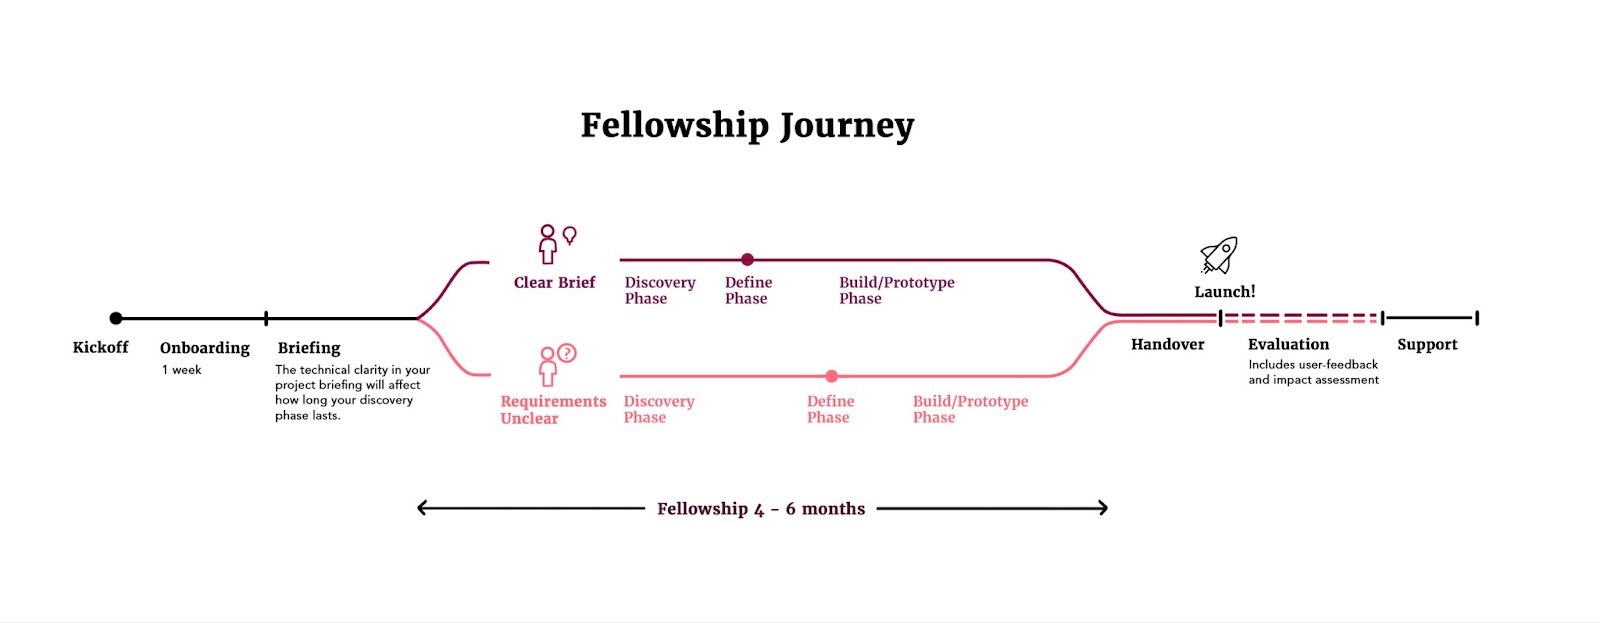 Fellowship Journey Jpeg